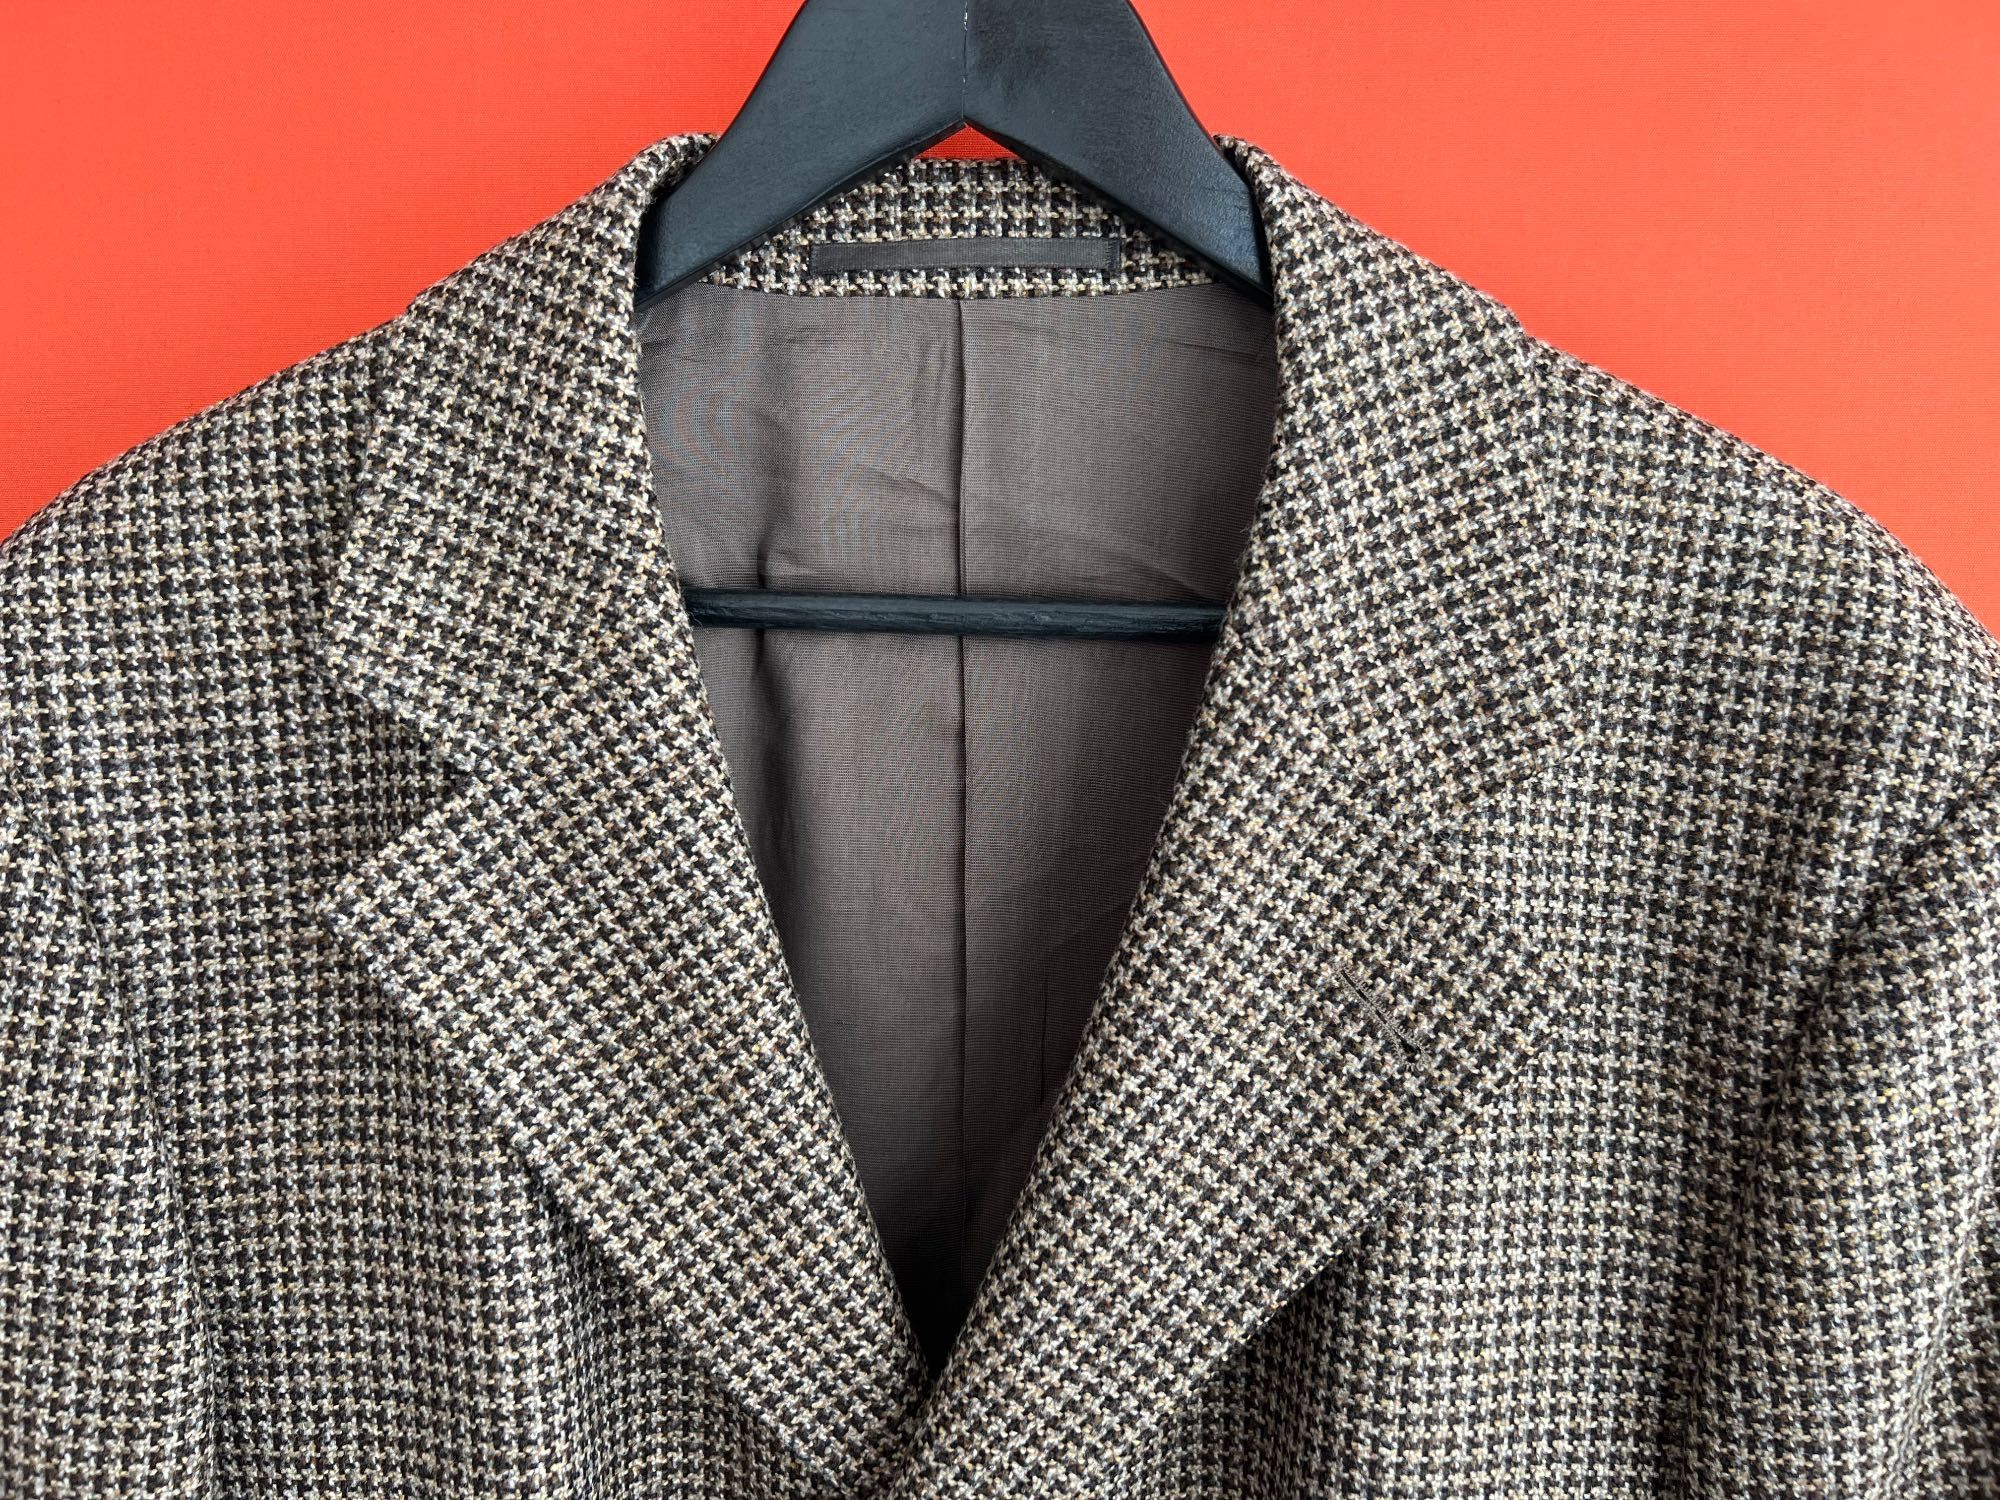 Eduard Dressler оригинал мужское шерстяное пальто размер XL XXL Б У